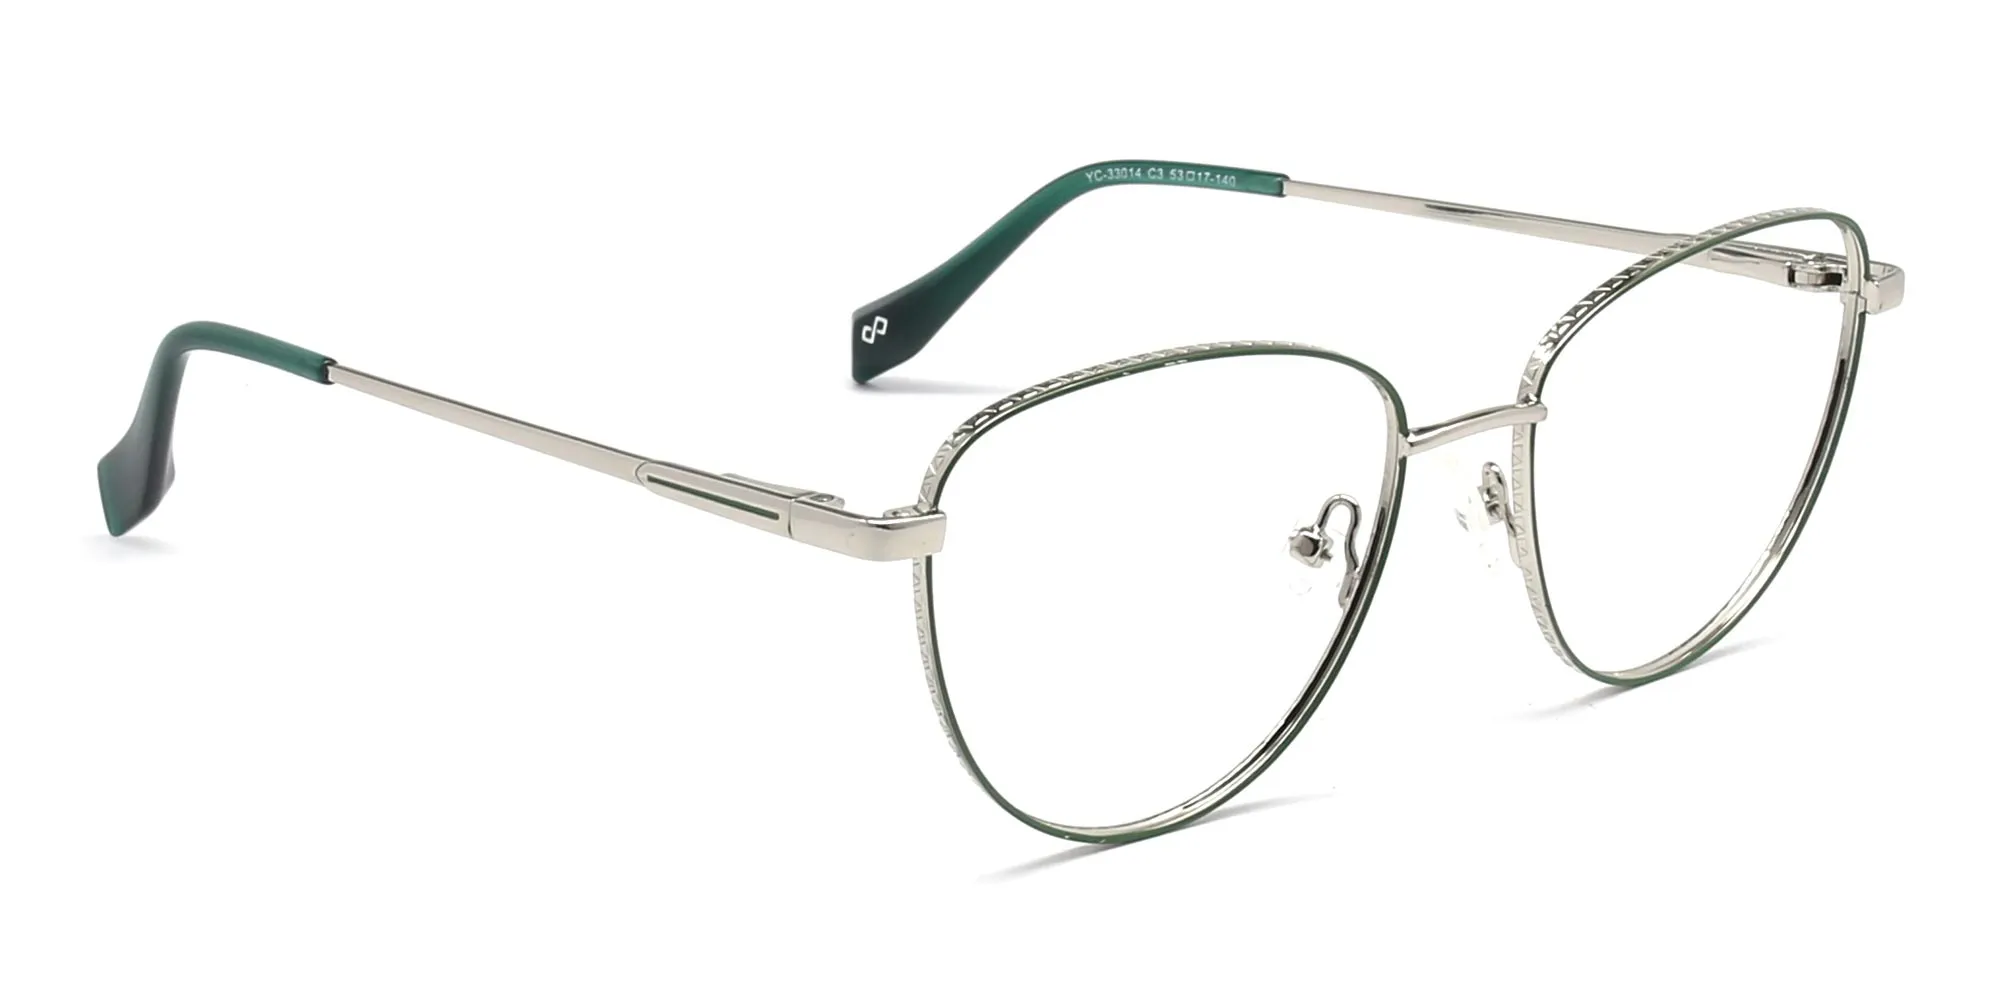 silver-frame-glasses-2